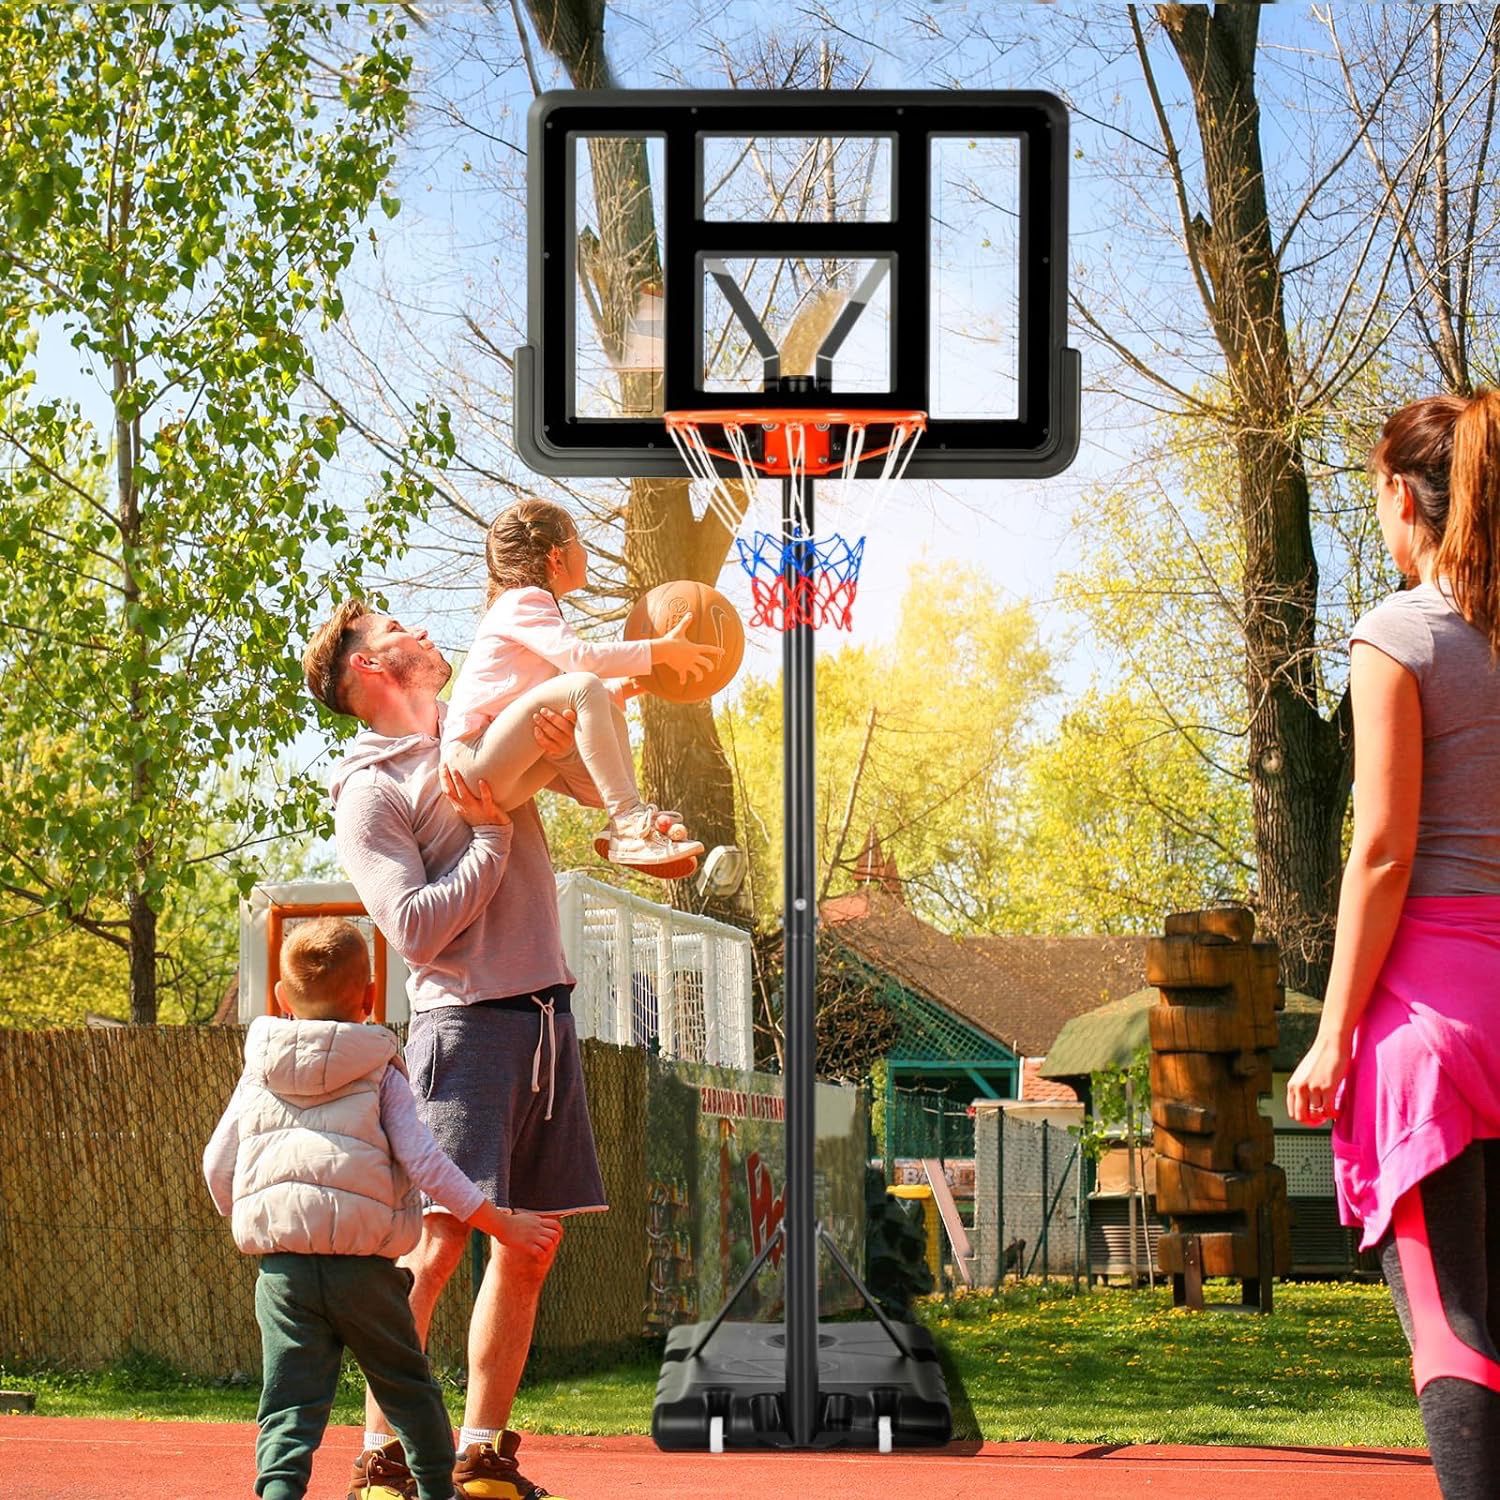 4.2-10ft Adjustable Height Portable Basketball Hoop Outdoor for Kids/Youth/Adult, 44 Inch Shatterproof Backboard w/Shock Absorbent Rim, Fillable Base,